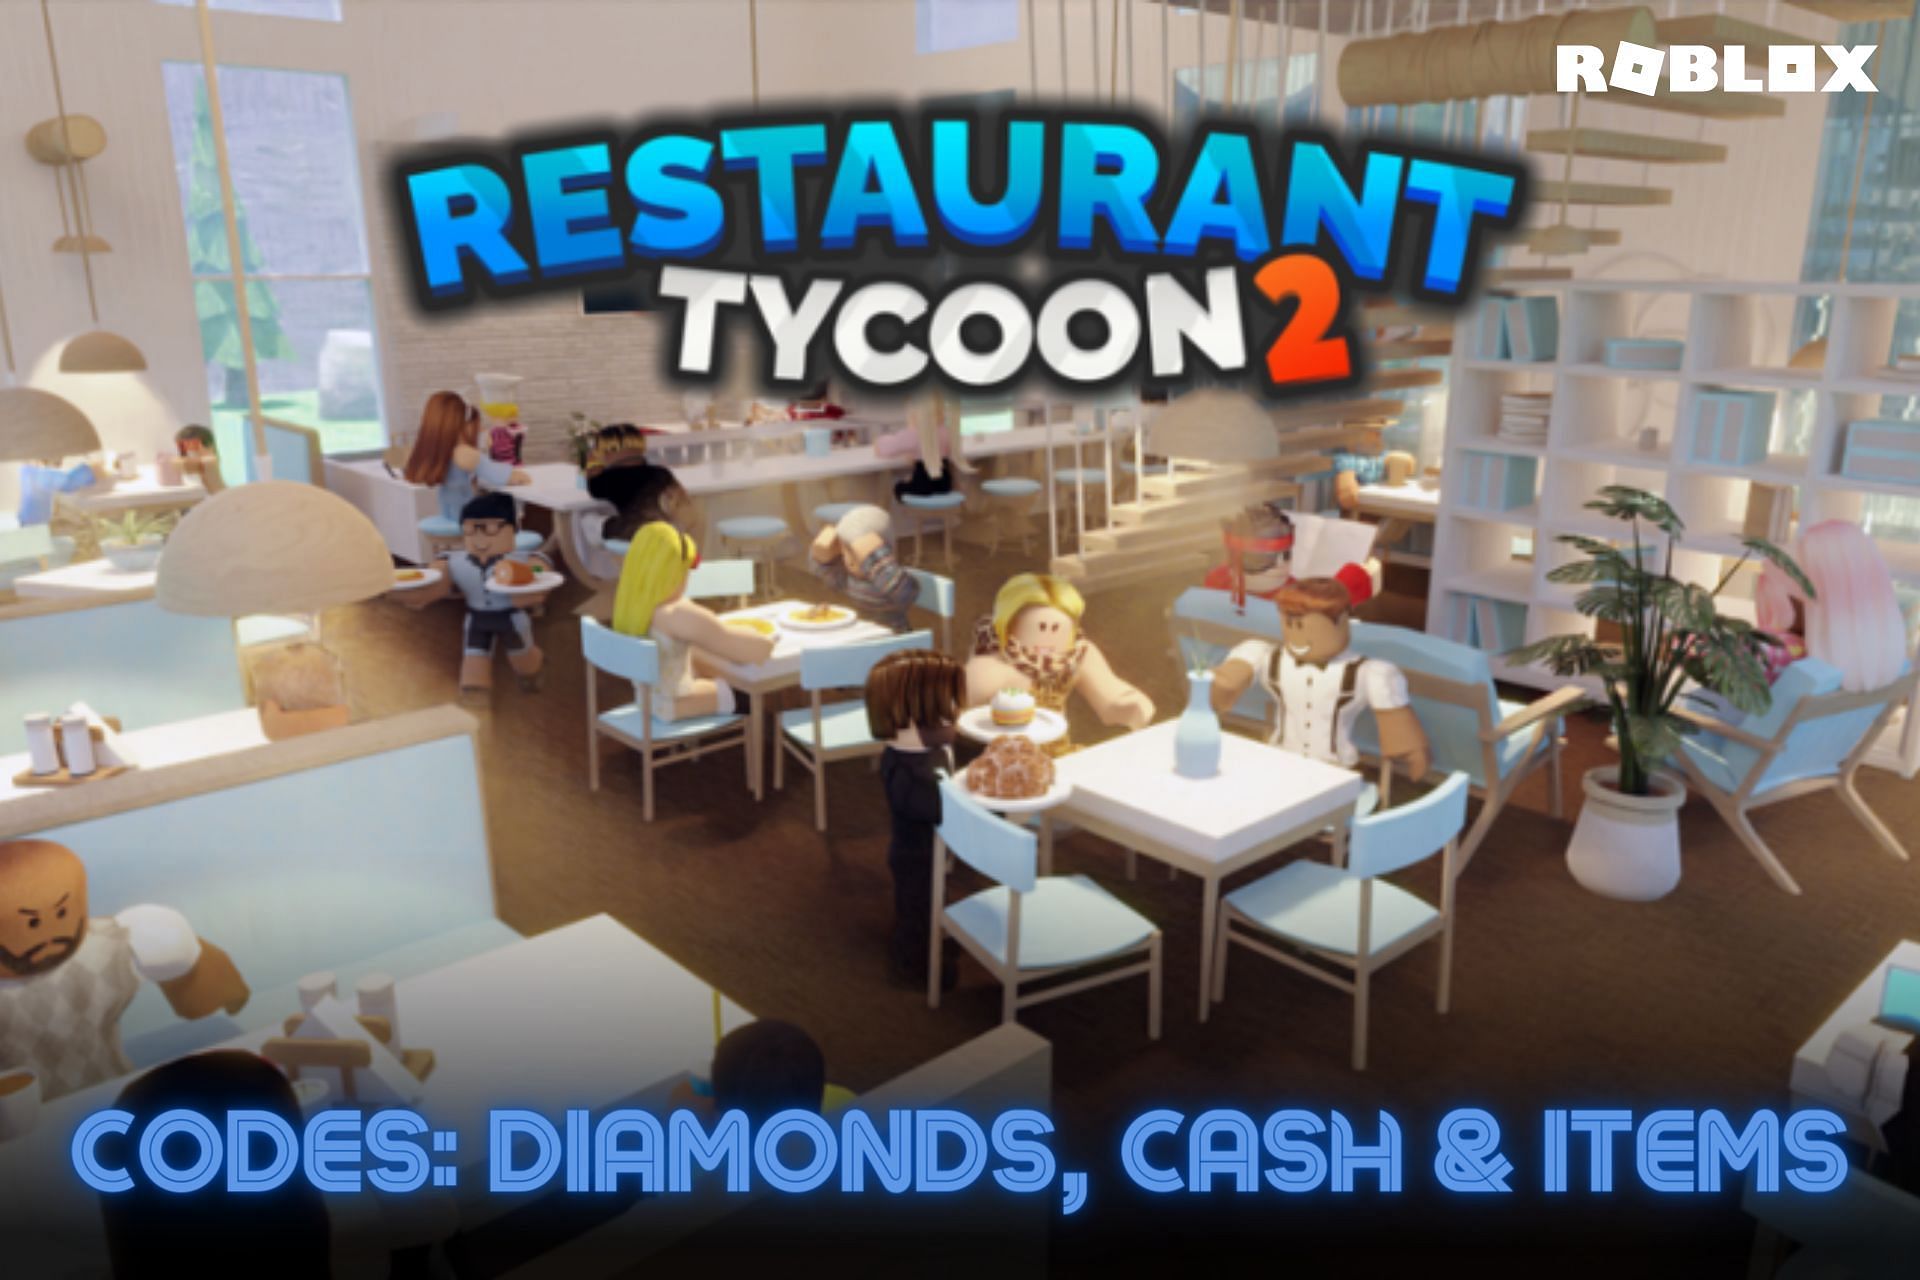 Roblox Restaurant Tycoon 2 : What